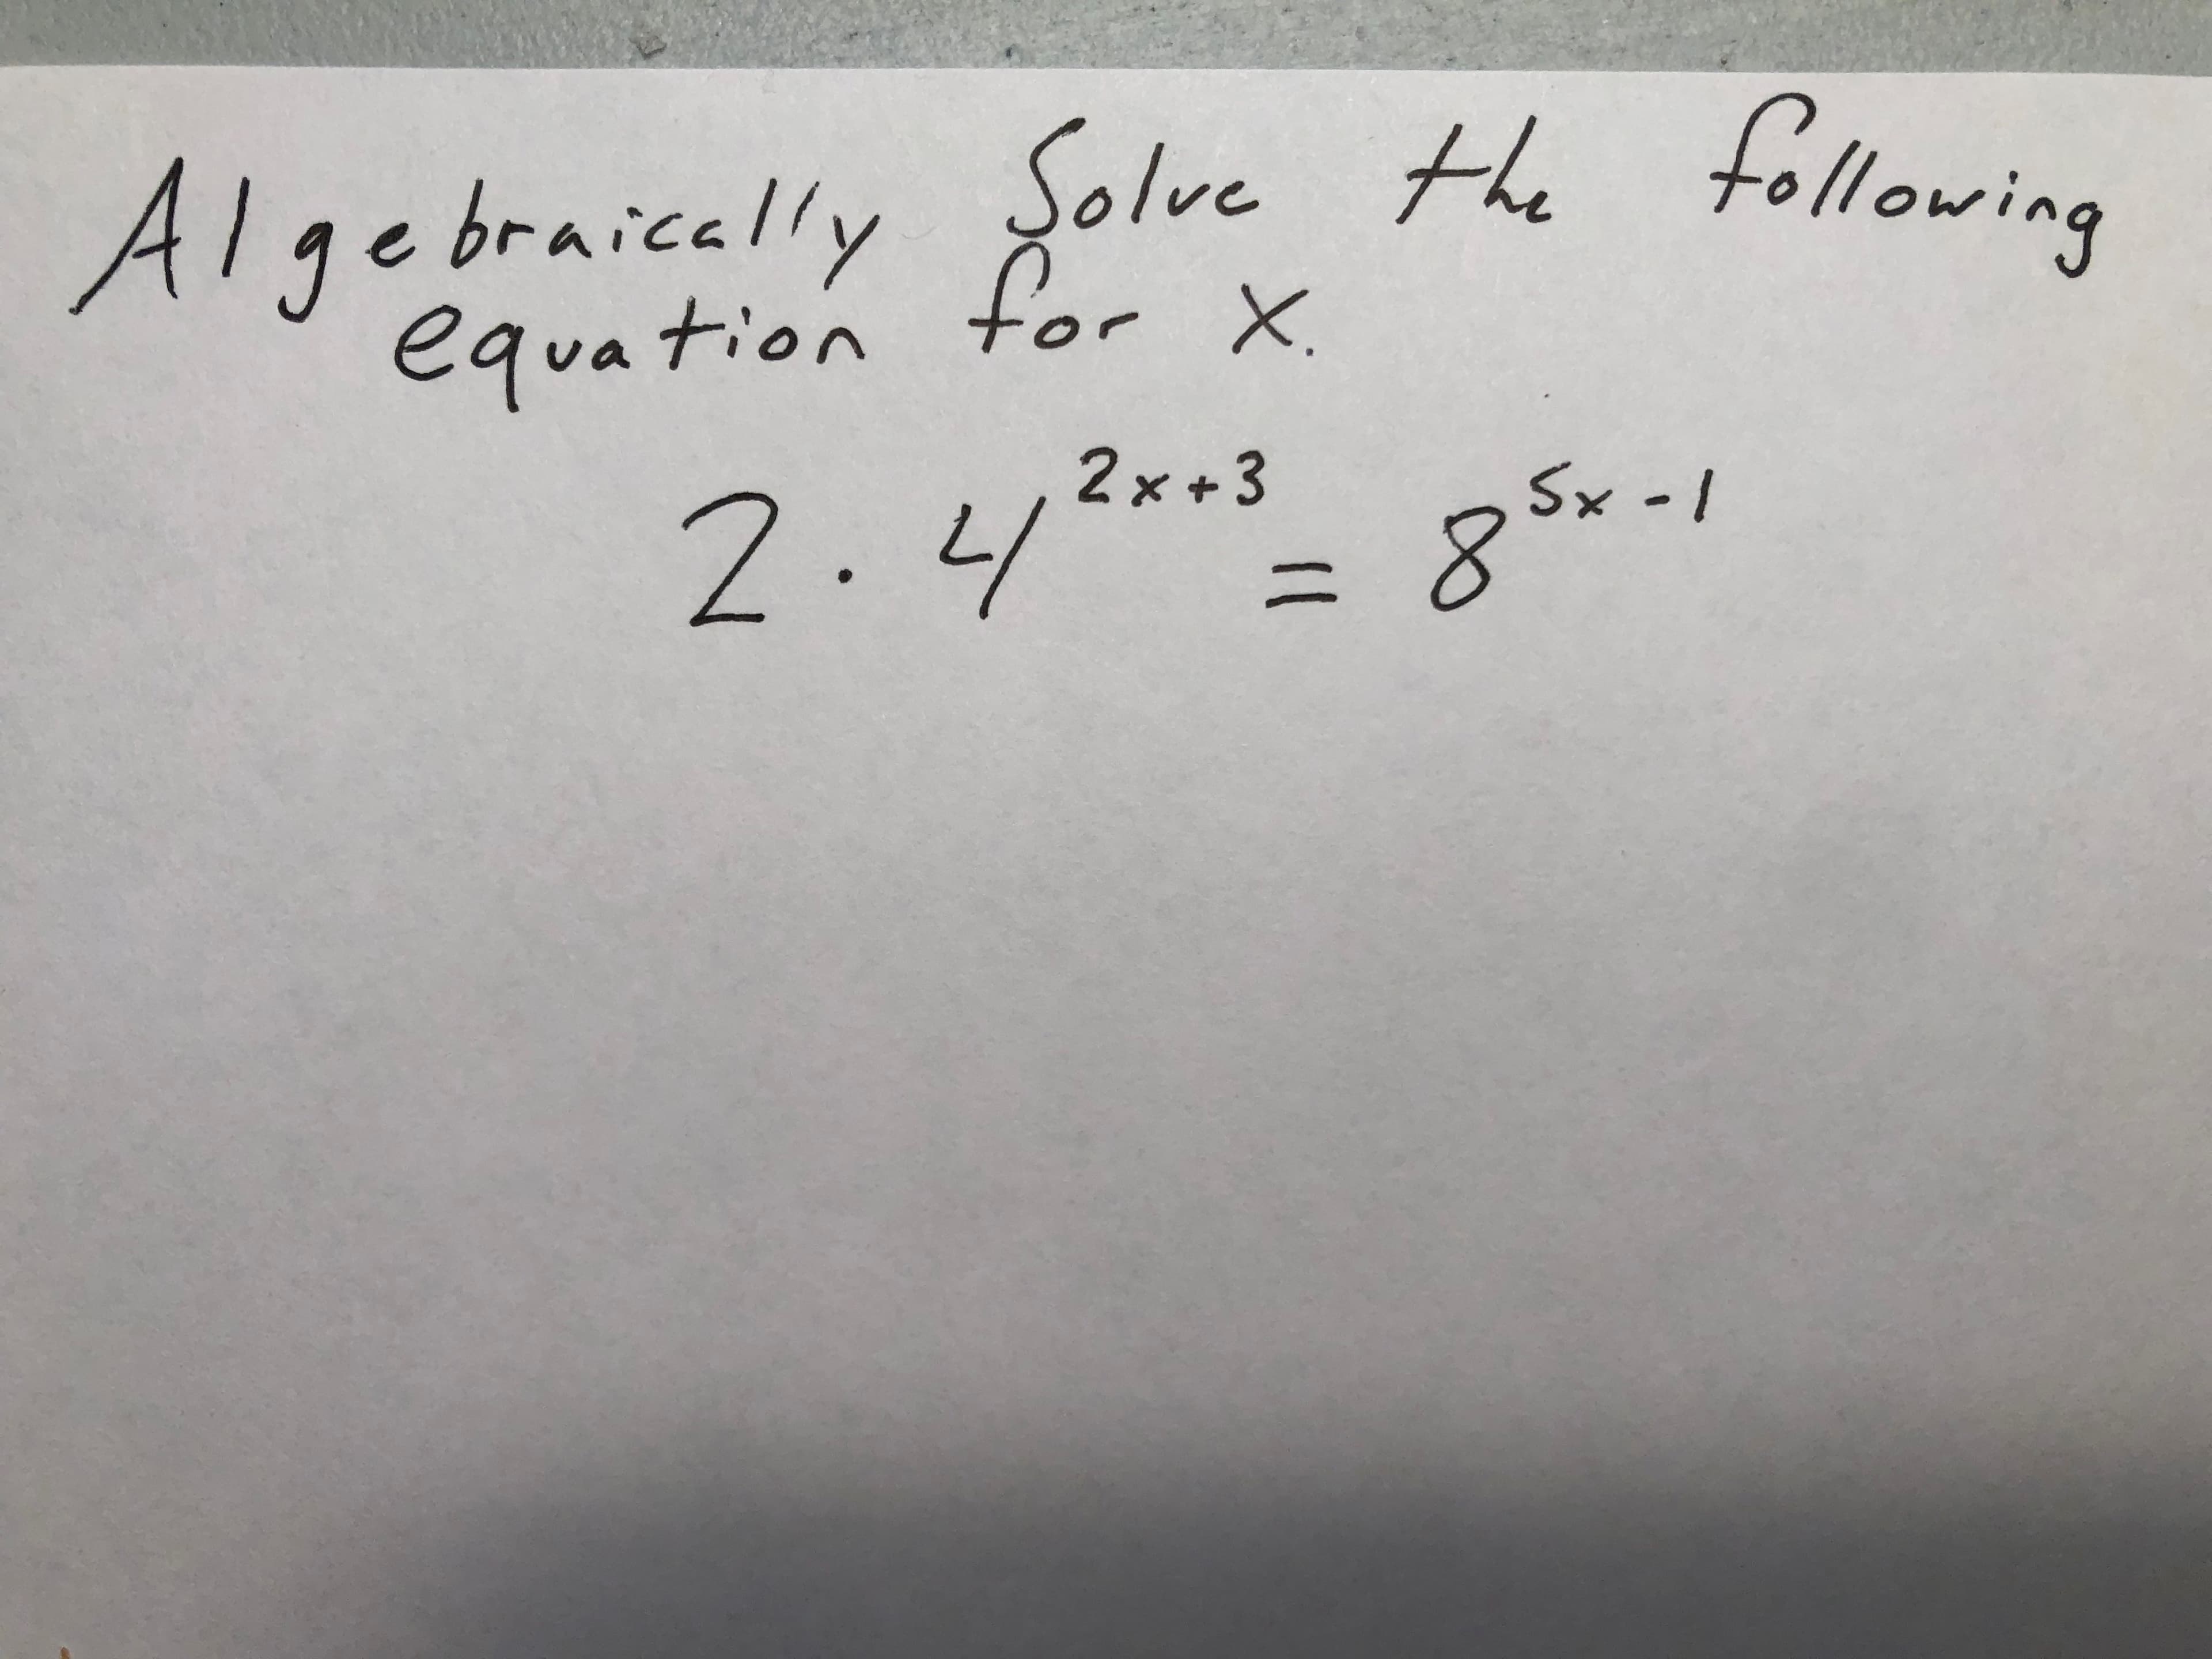 Şolve the following
Algebraically
equation fo x
2x+3
2.4°***-85~-/
|3D
